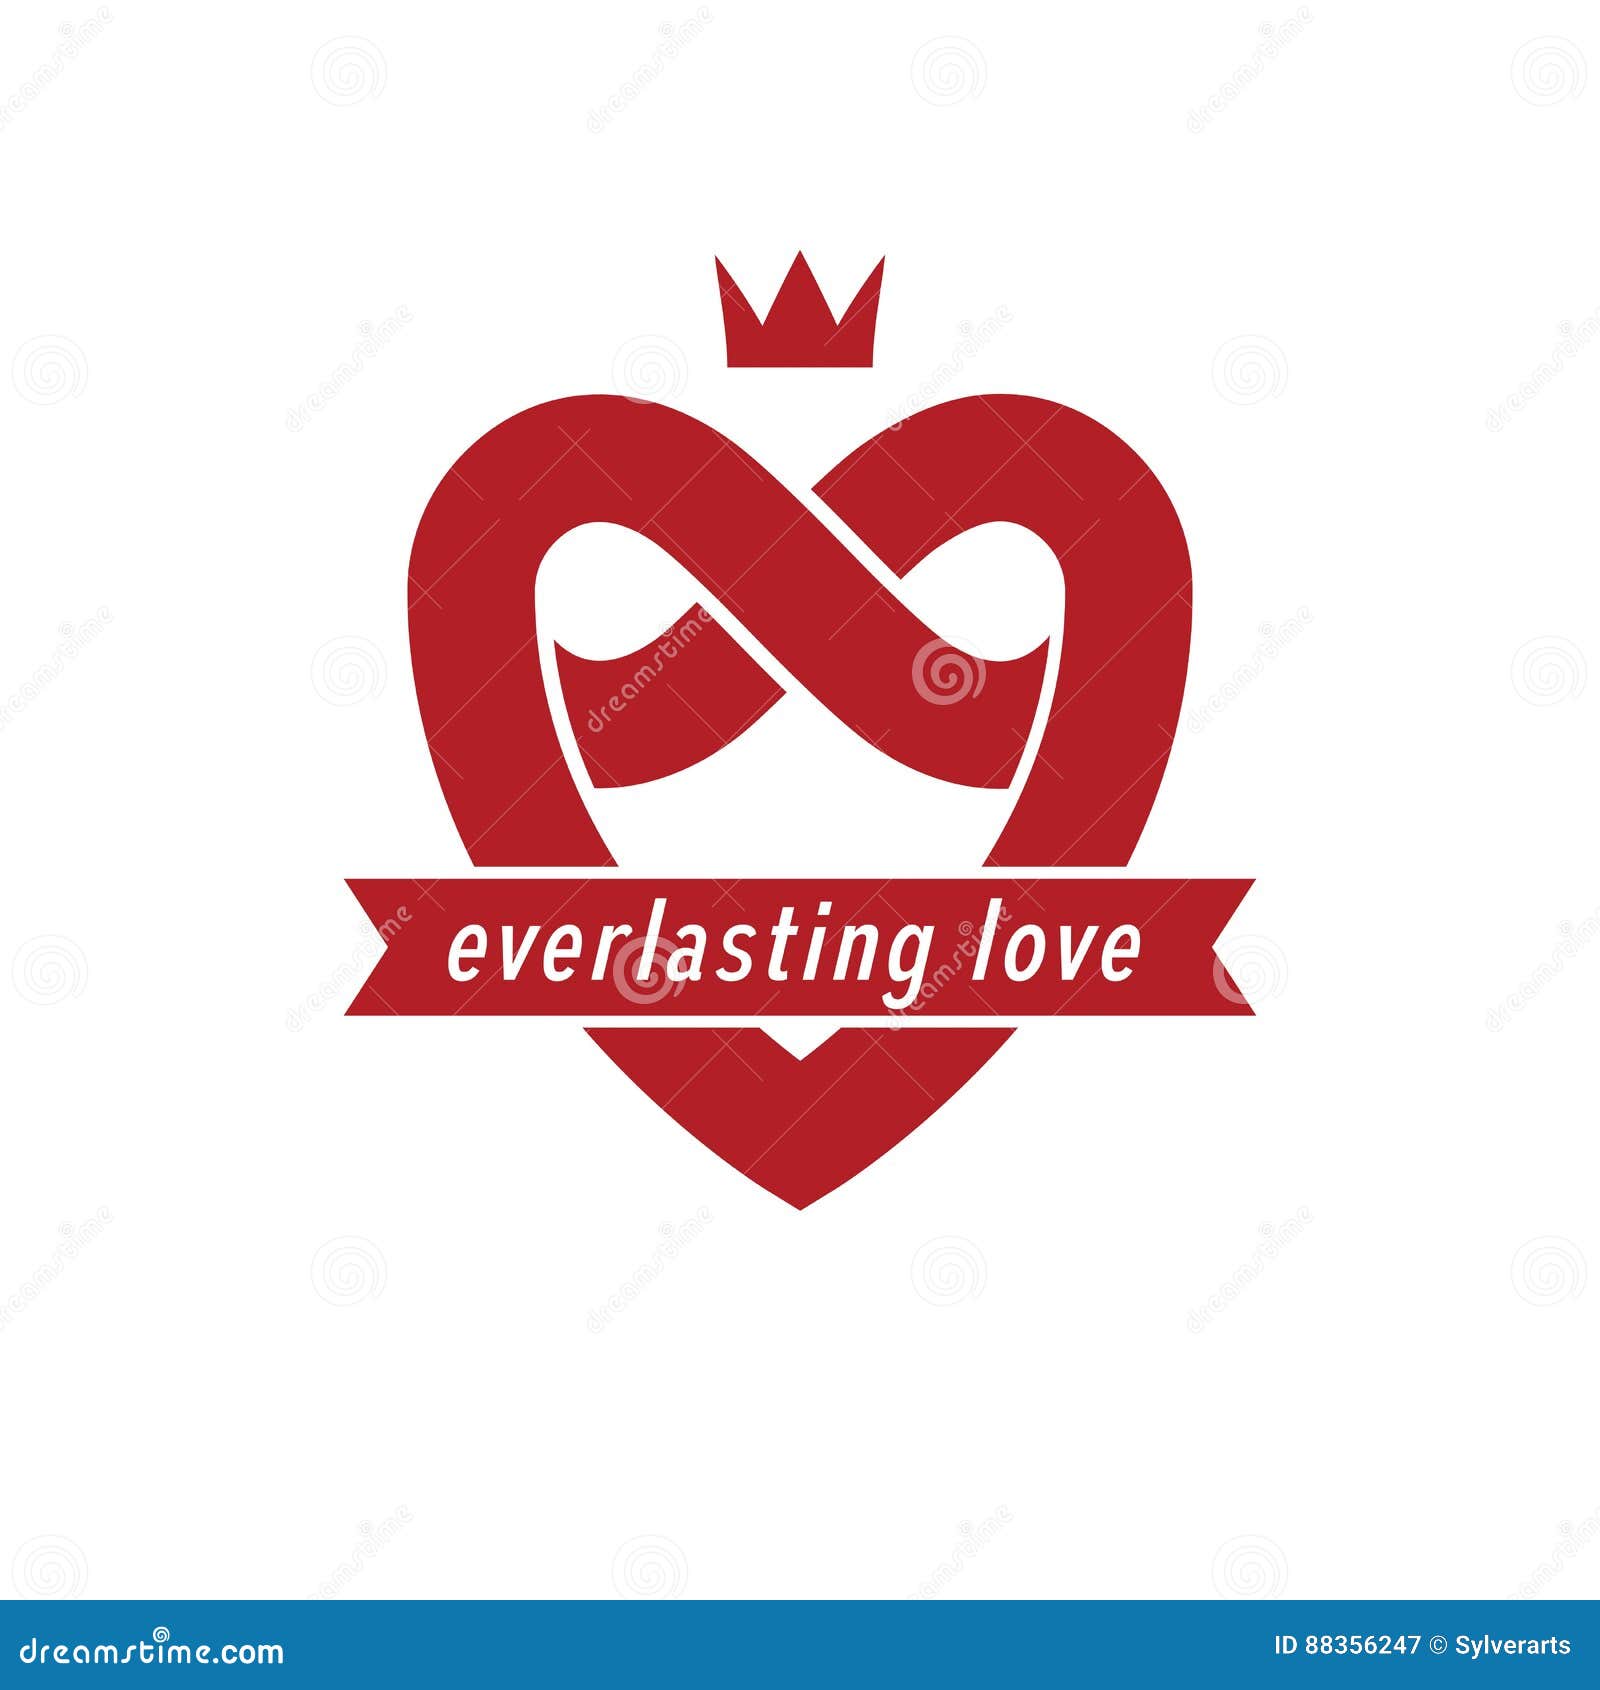 Love everlasting wiki